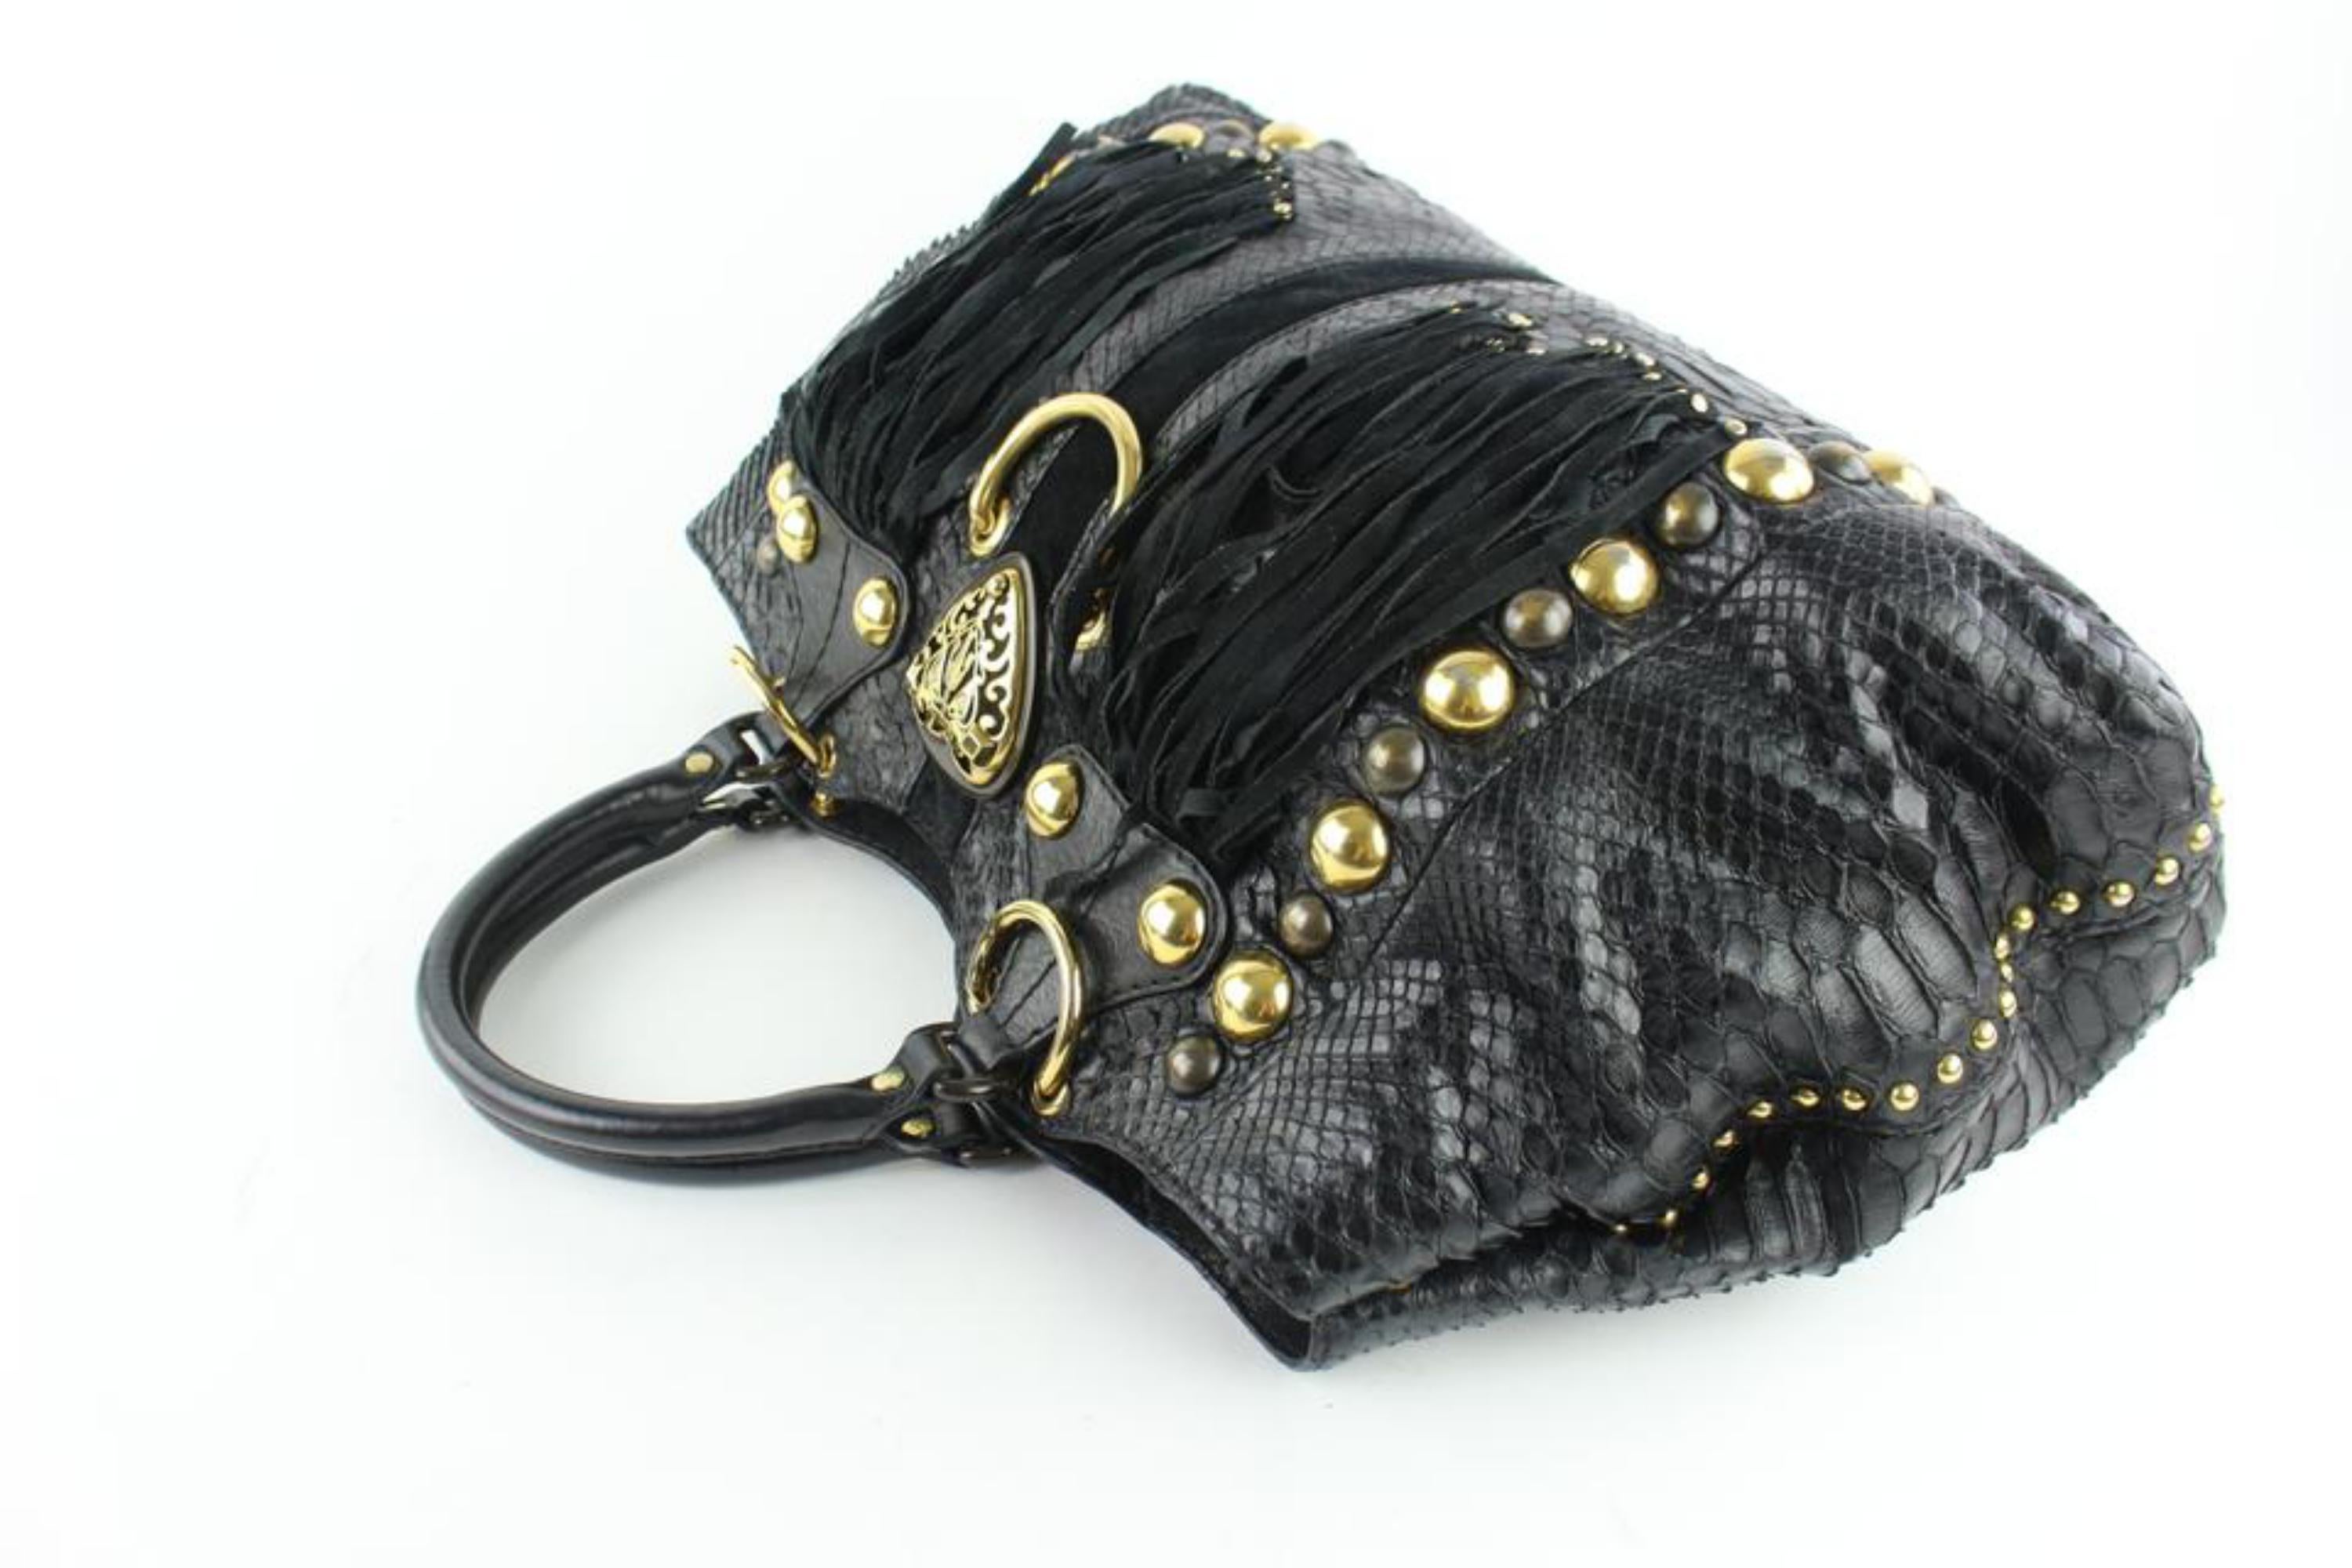 Gucci Suede Fringe Large  Tote 5gz0911 Black Python Skin Leather Shoulder Bag In Good Condition For Sale In Forest Hills, NY